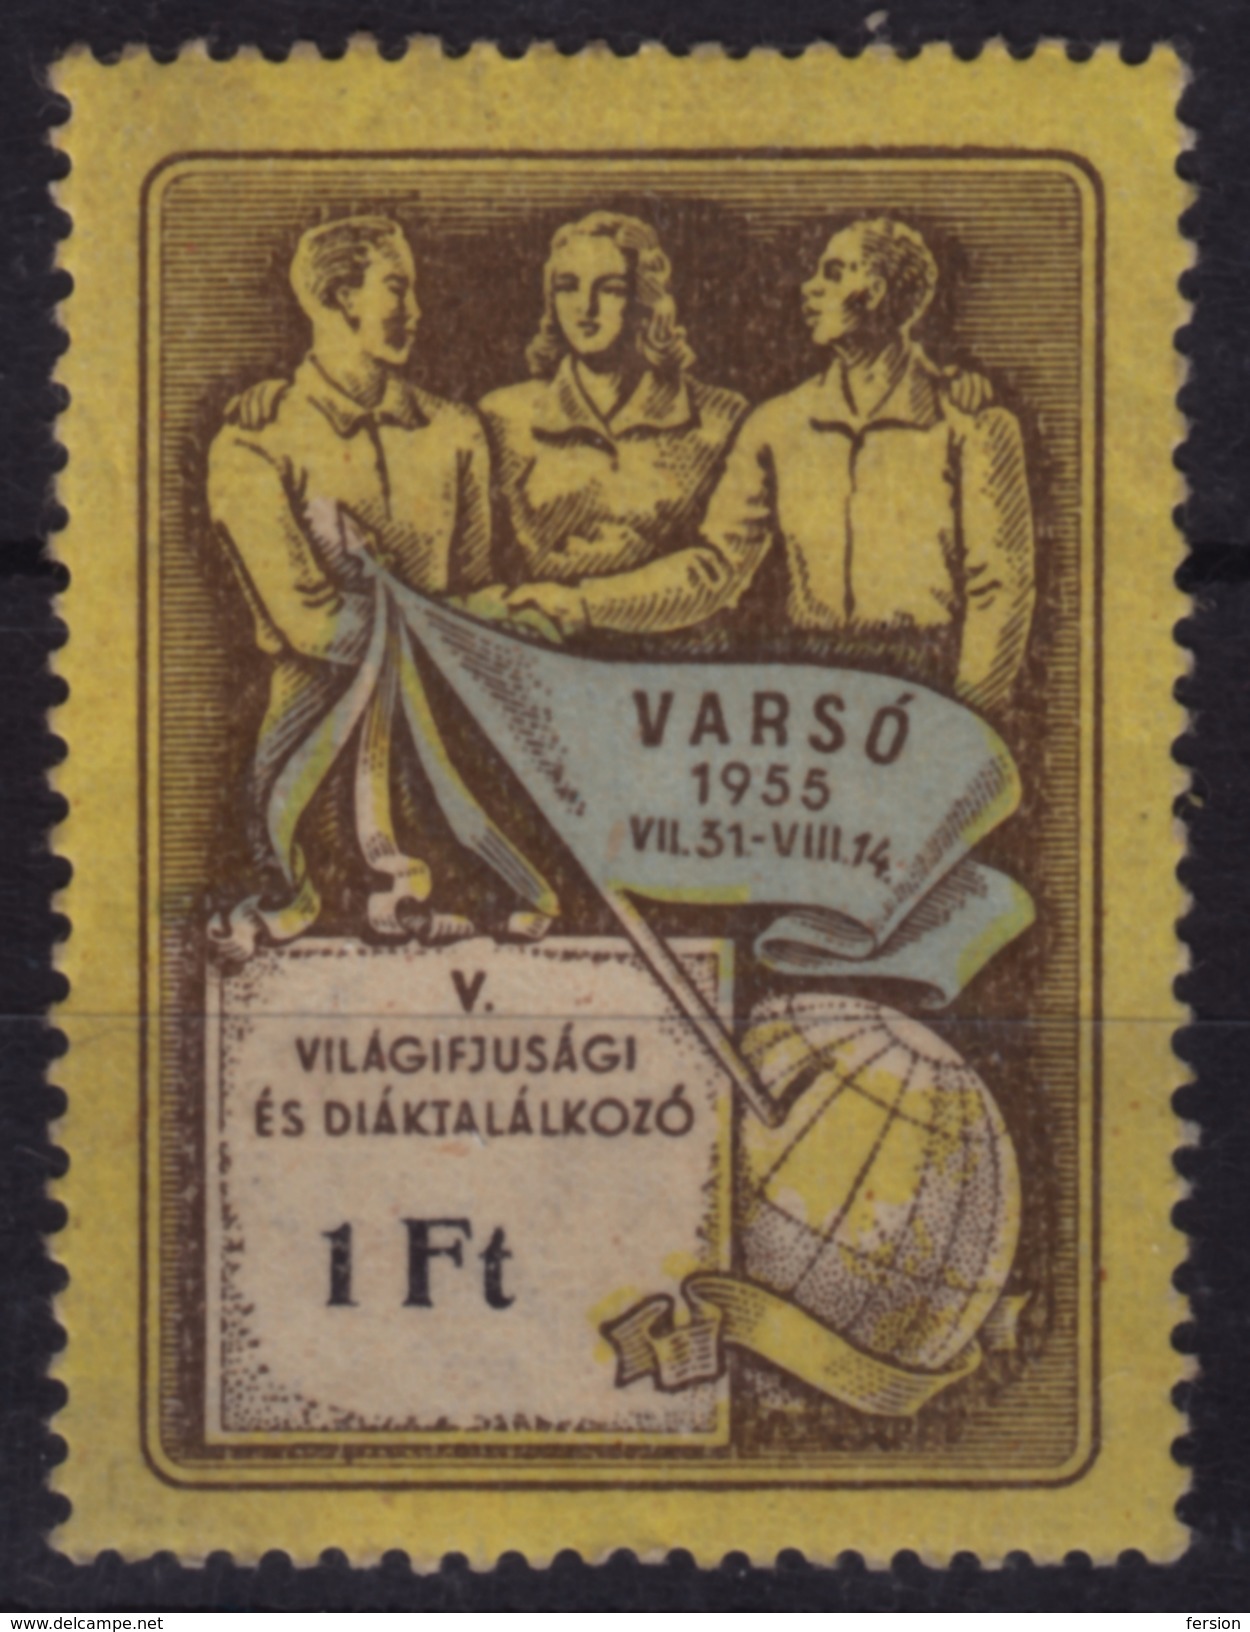 Cinderella Vignette Label Member Charity Stamp World Youth Organisation Congress / POLAND Warsaw - 1 Ft 1955 Hungary - Dienstzegels